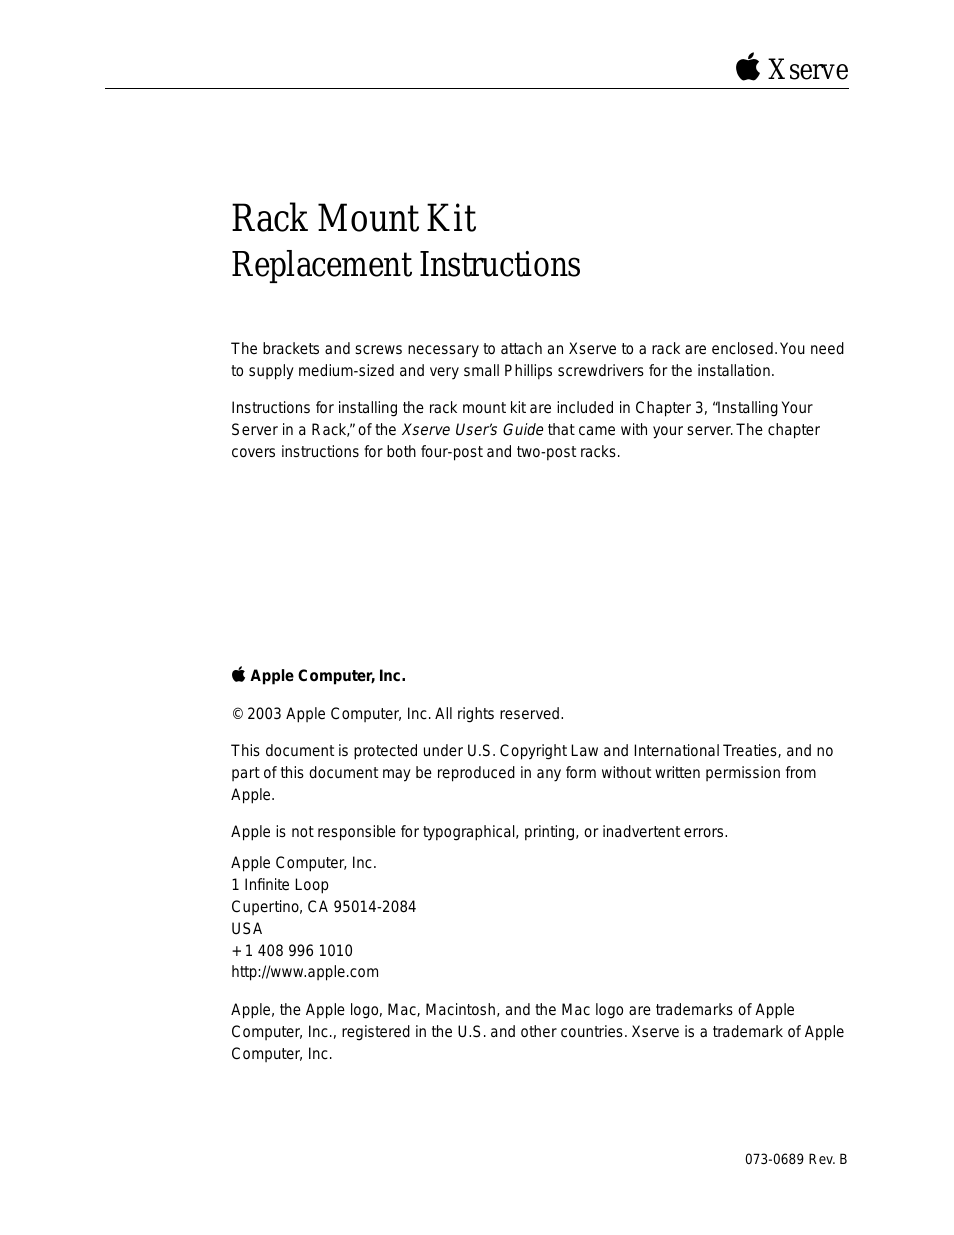 Xserve (Rack Mount Kit Replacement)